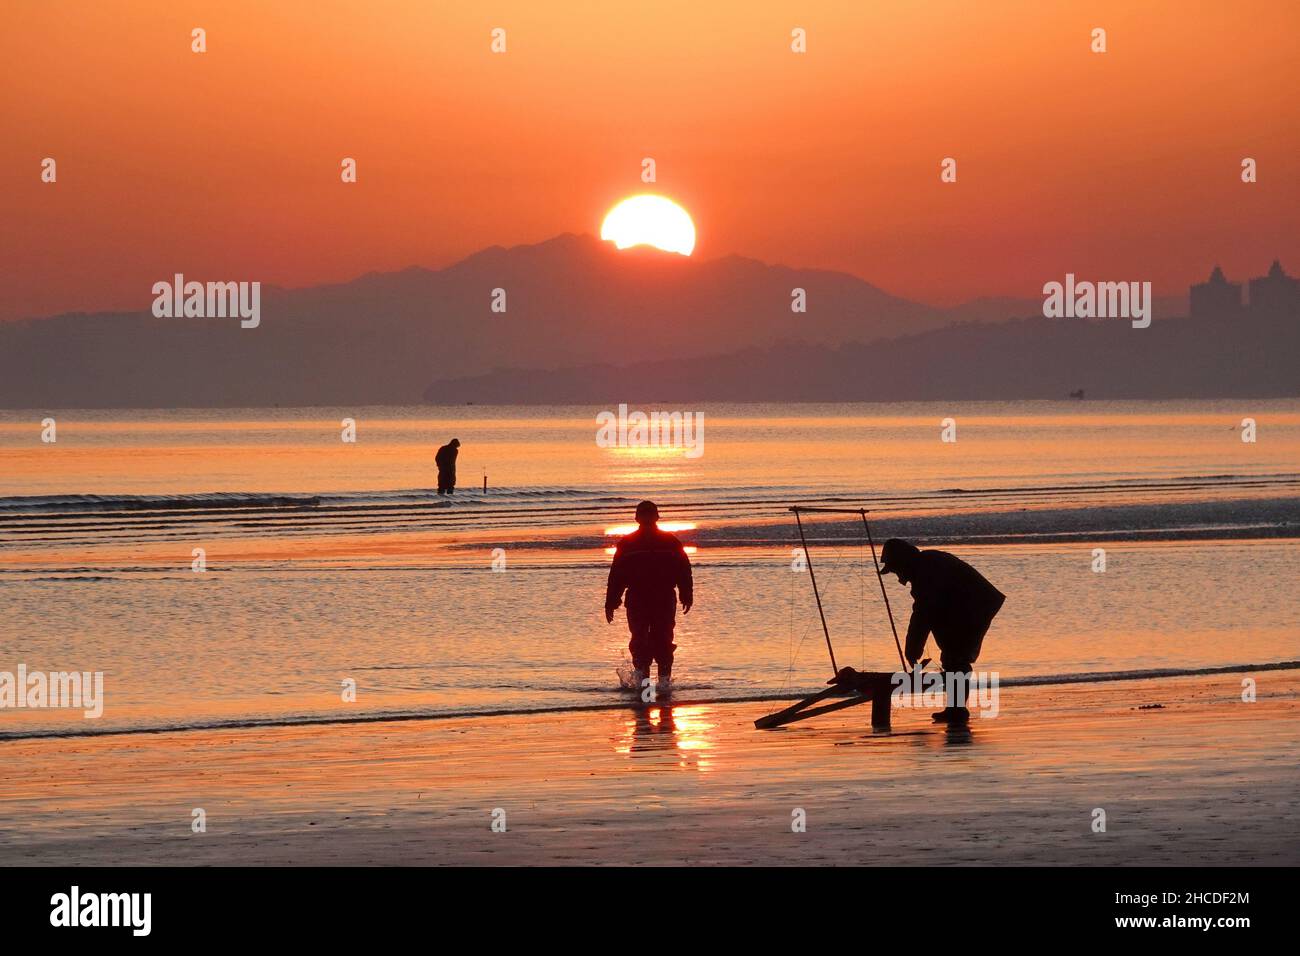 YANTAI, CHINA - 8. DEZEMBER 2021 - Sonnenaufgang über dem Meer in Yantai, Ostchinas Provinz Shandong, 8. Dezember 2021. Stockfoto